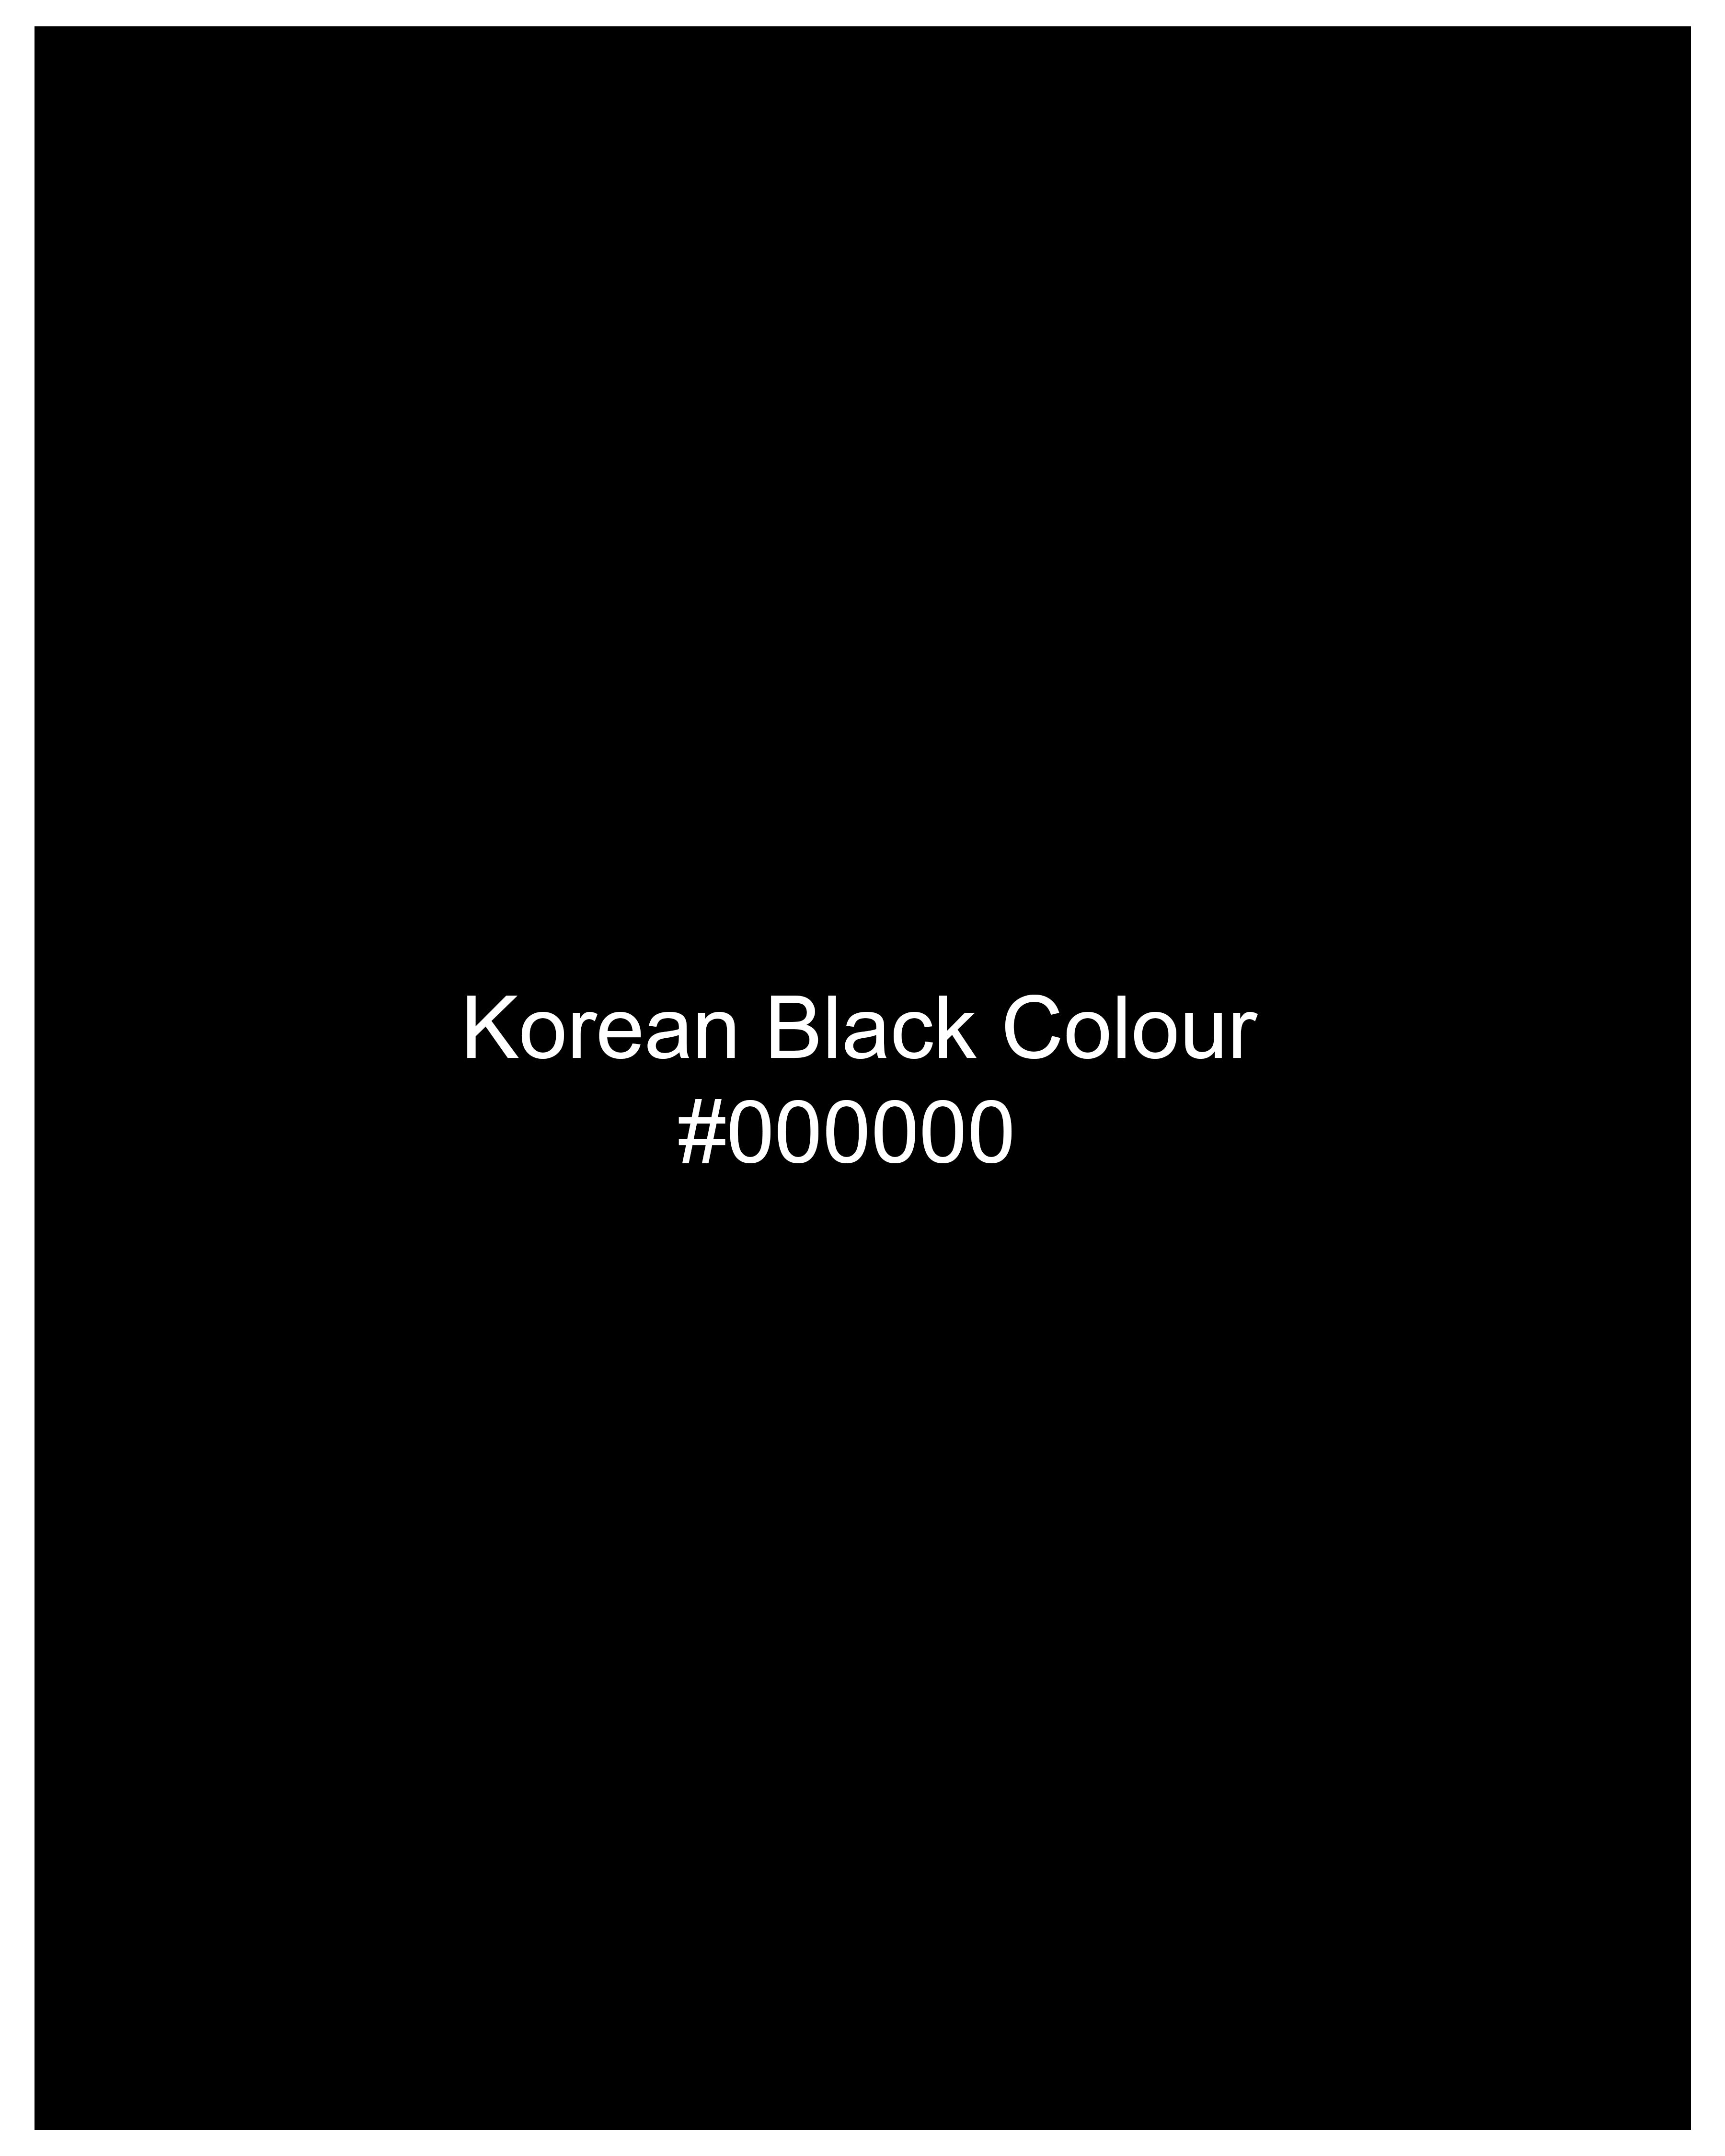 Korean Black (The Best Black We Have) Double Breasted Blazer BL2609-DB-36, BL2609-DB-38, BL2609-DB-40, BL2609-DB-42, BL2609-DB-44, BL2609-DB-46, BL2609-DB-48, BL2609-DB-50, BL2609-DB-52, BL2609-DB-54, BL2609-DB-56, BL2609-DB-58, BL2609-DB-60